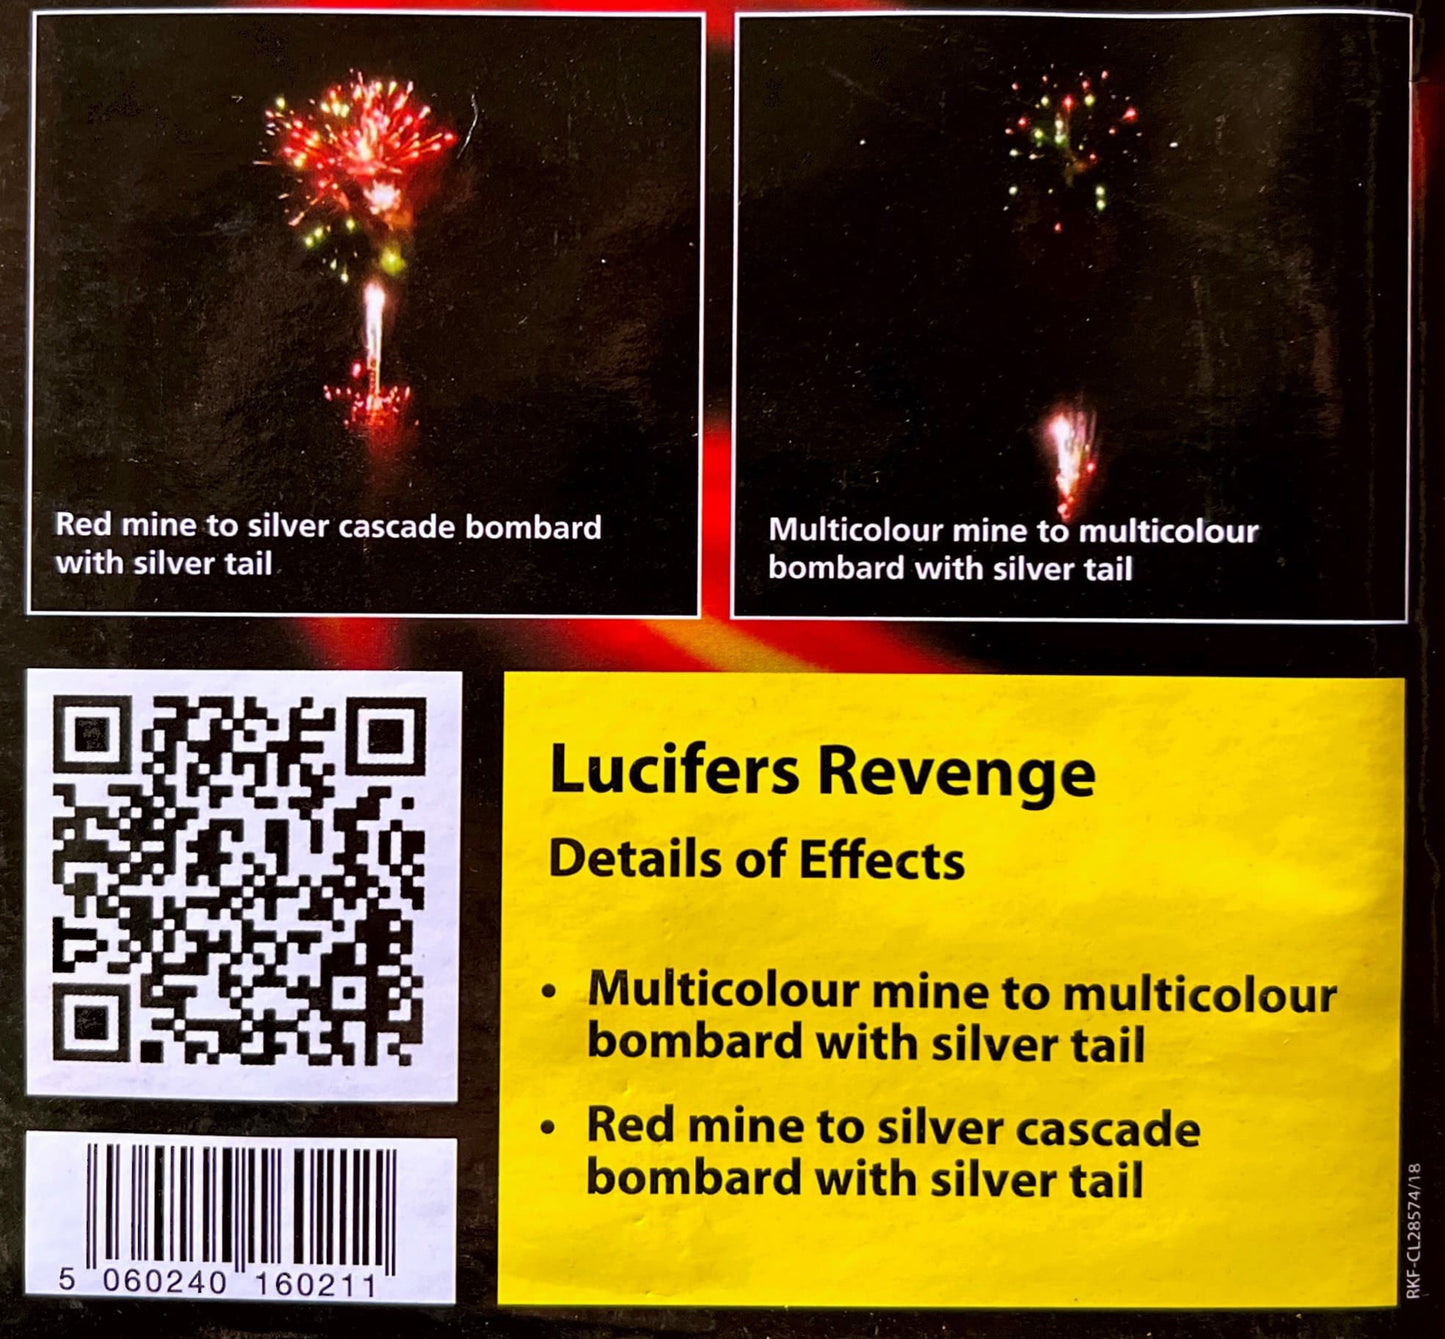 Lucifer's Revenge by Kimbolton Fireworks Effects Information